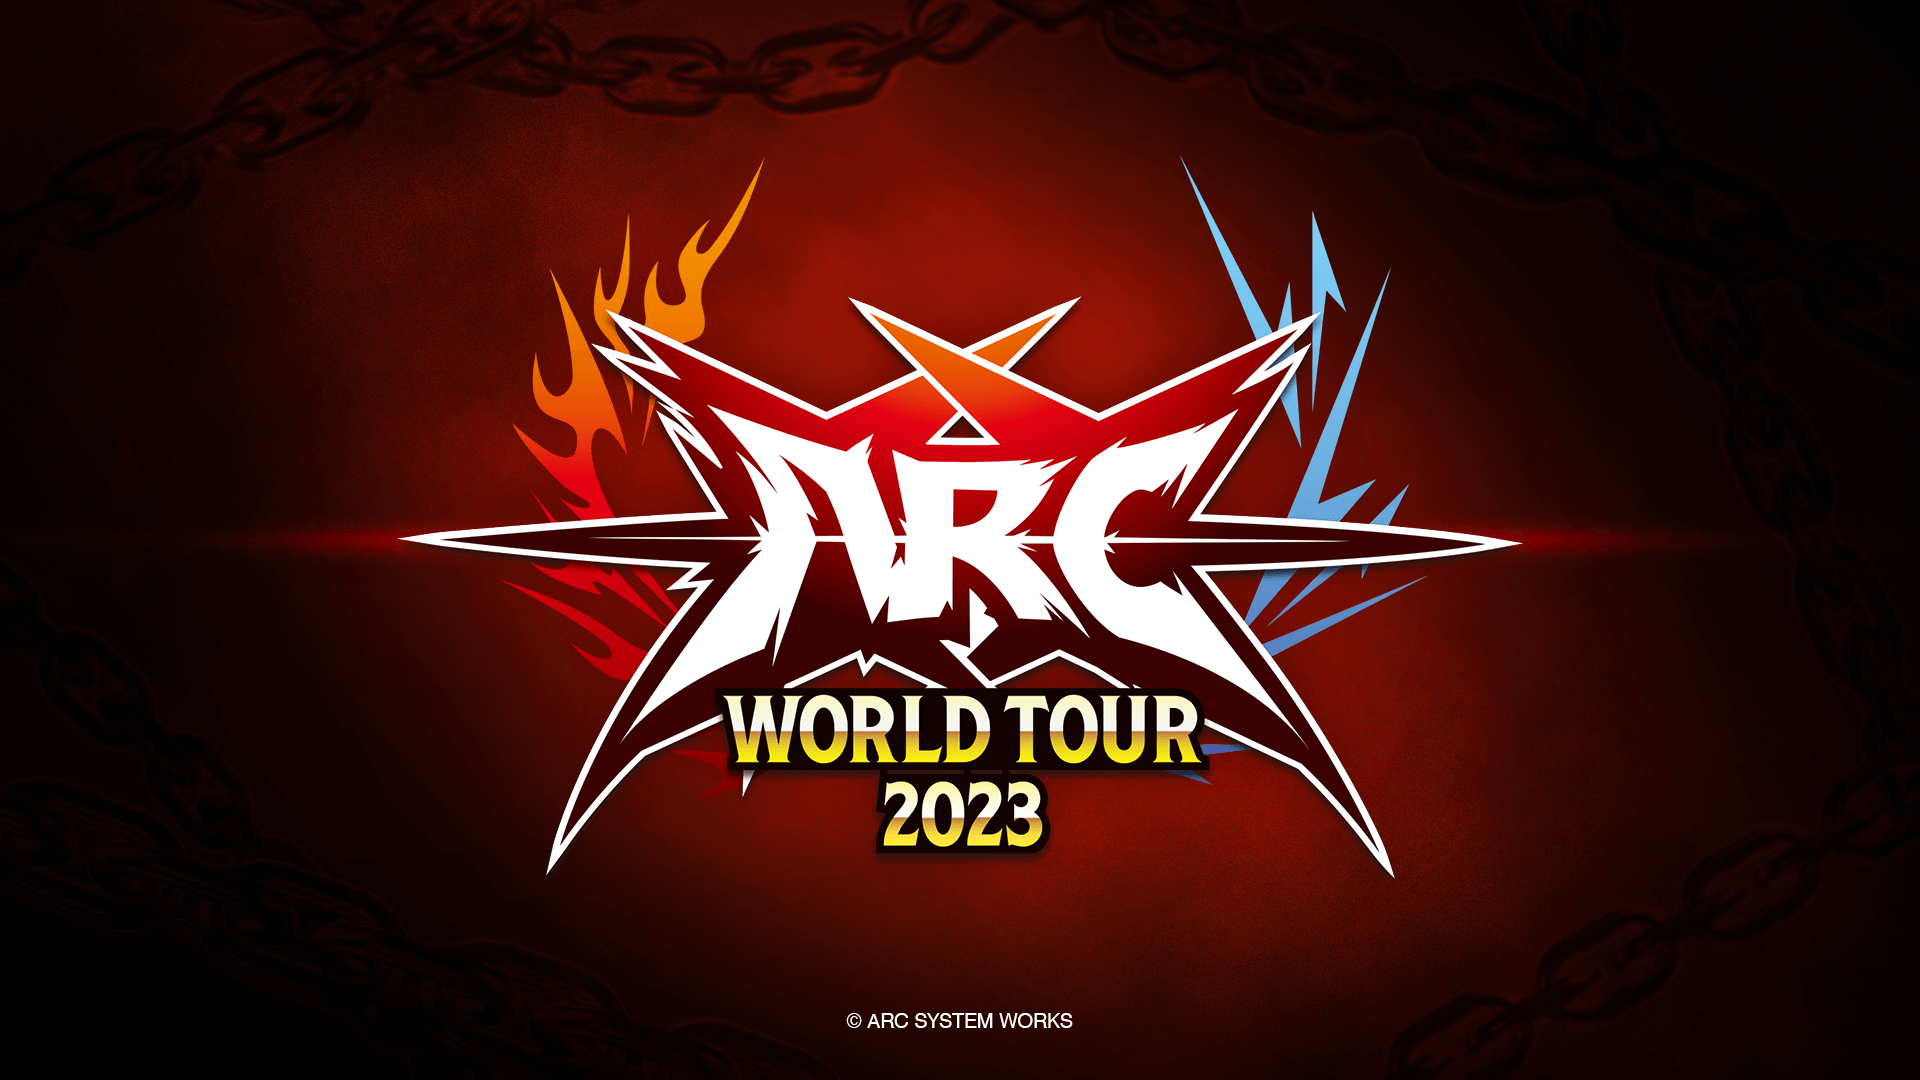 ArcSys Celebrates 35th Anniversary With Arc World Tour 2023 Reveal